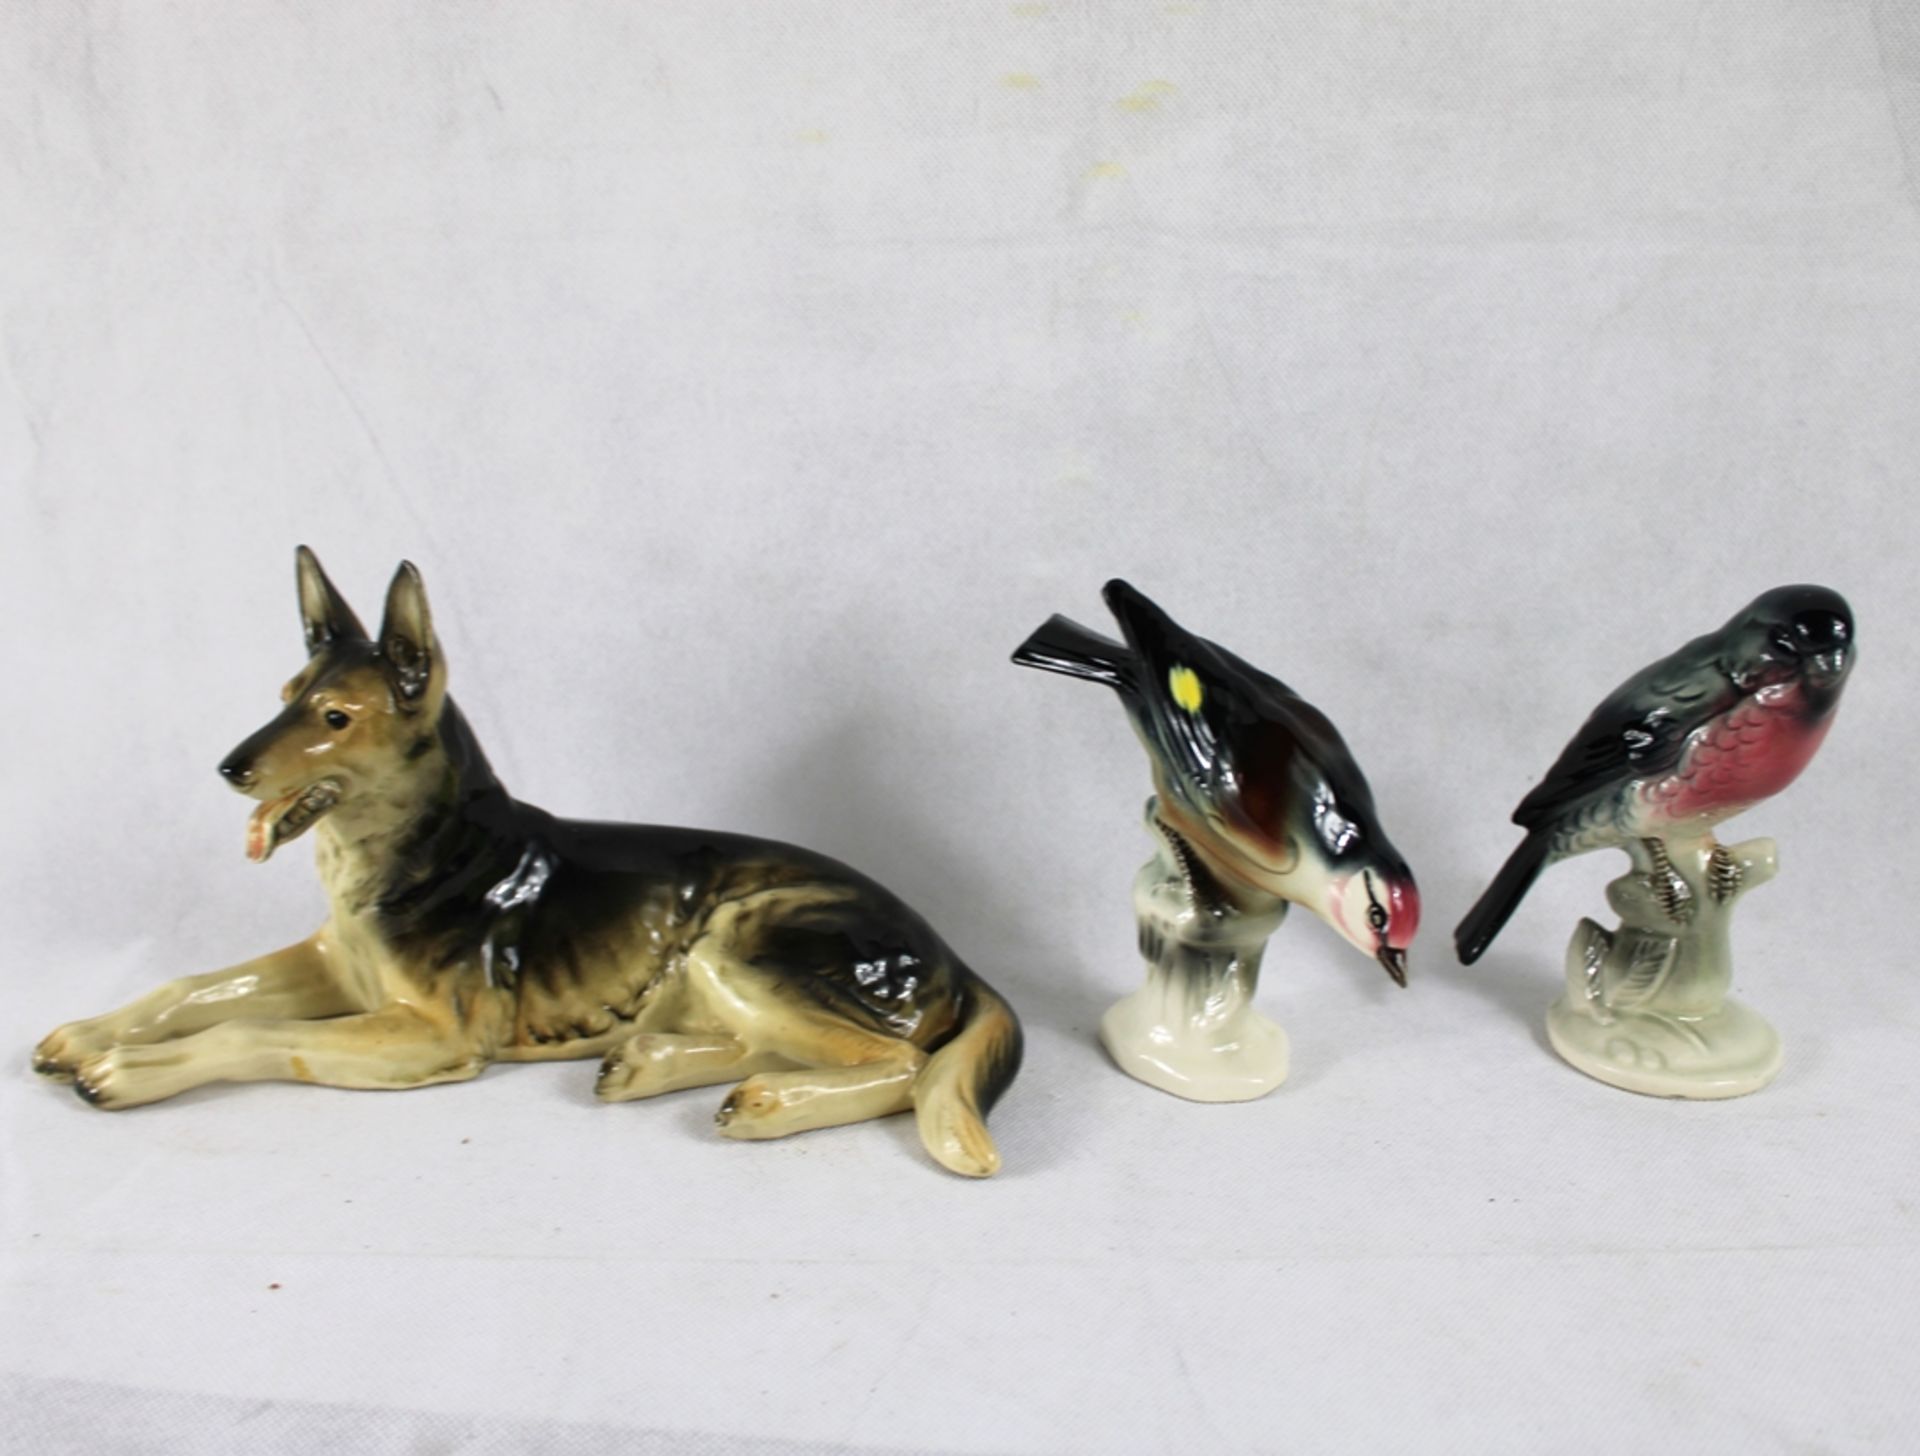 Porzellanfiguren Schäferhunde Rehe Vögel etc. Konvolut 8 St., vereinzelt Beschädigungen möglich - Image 3 of 3